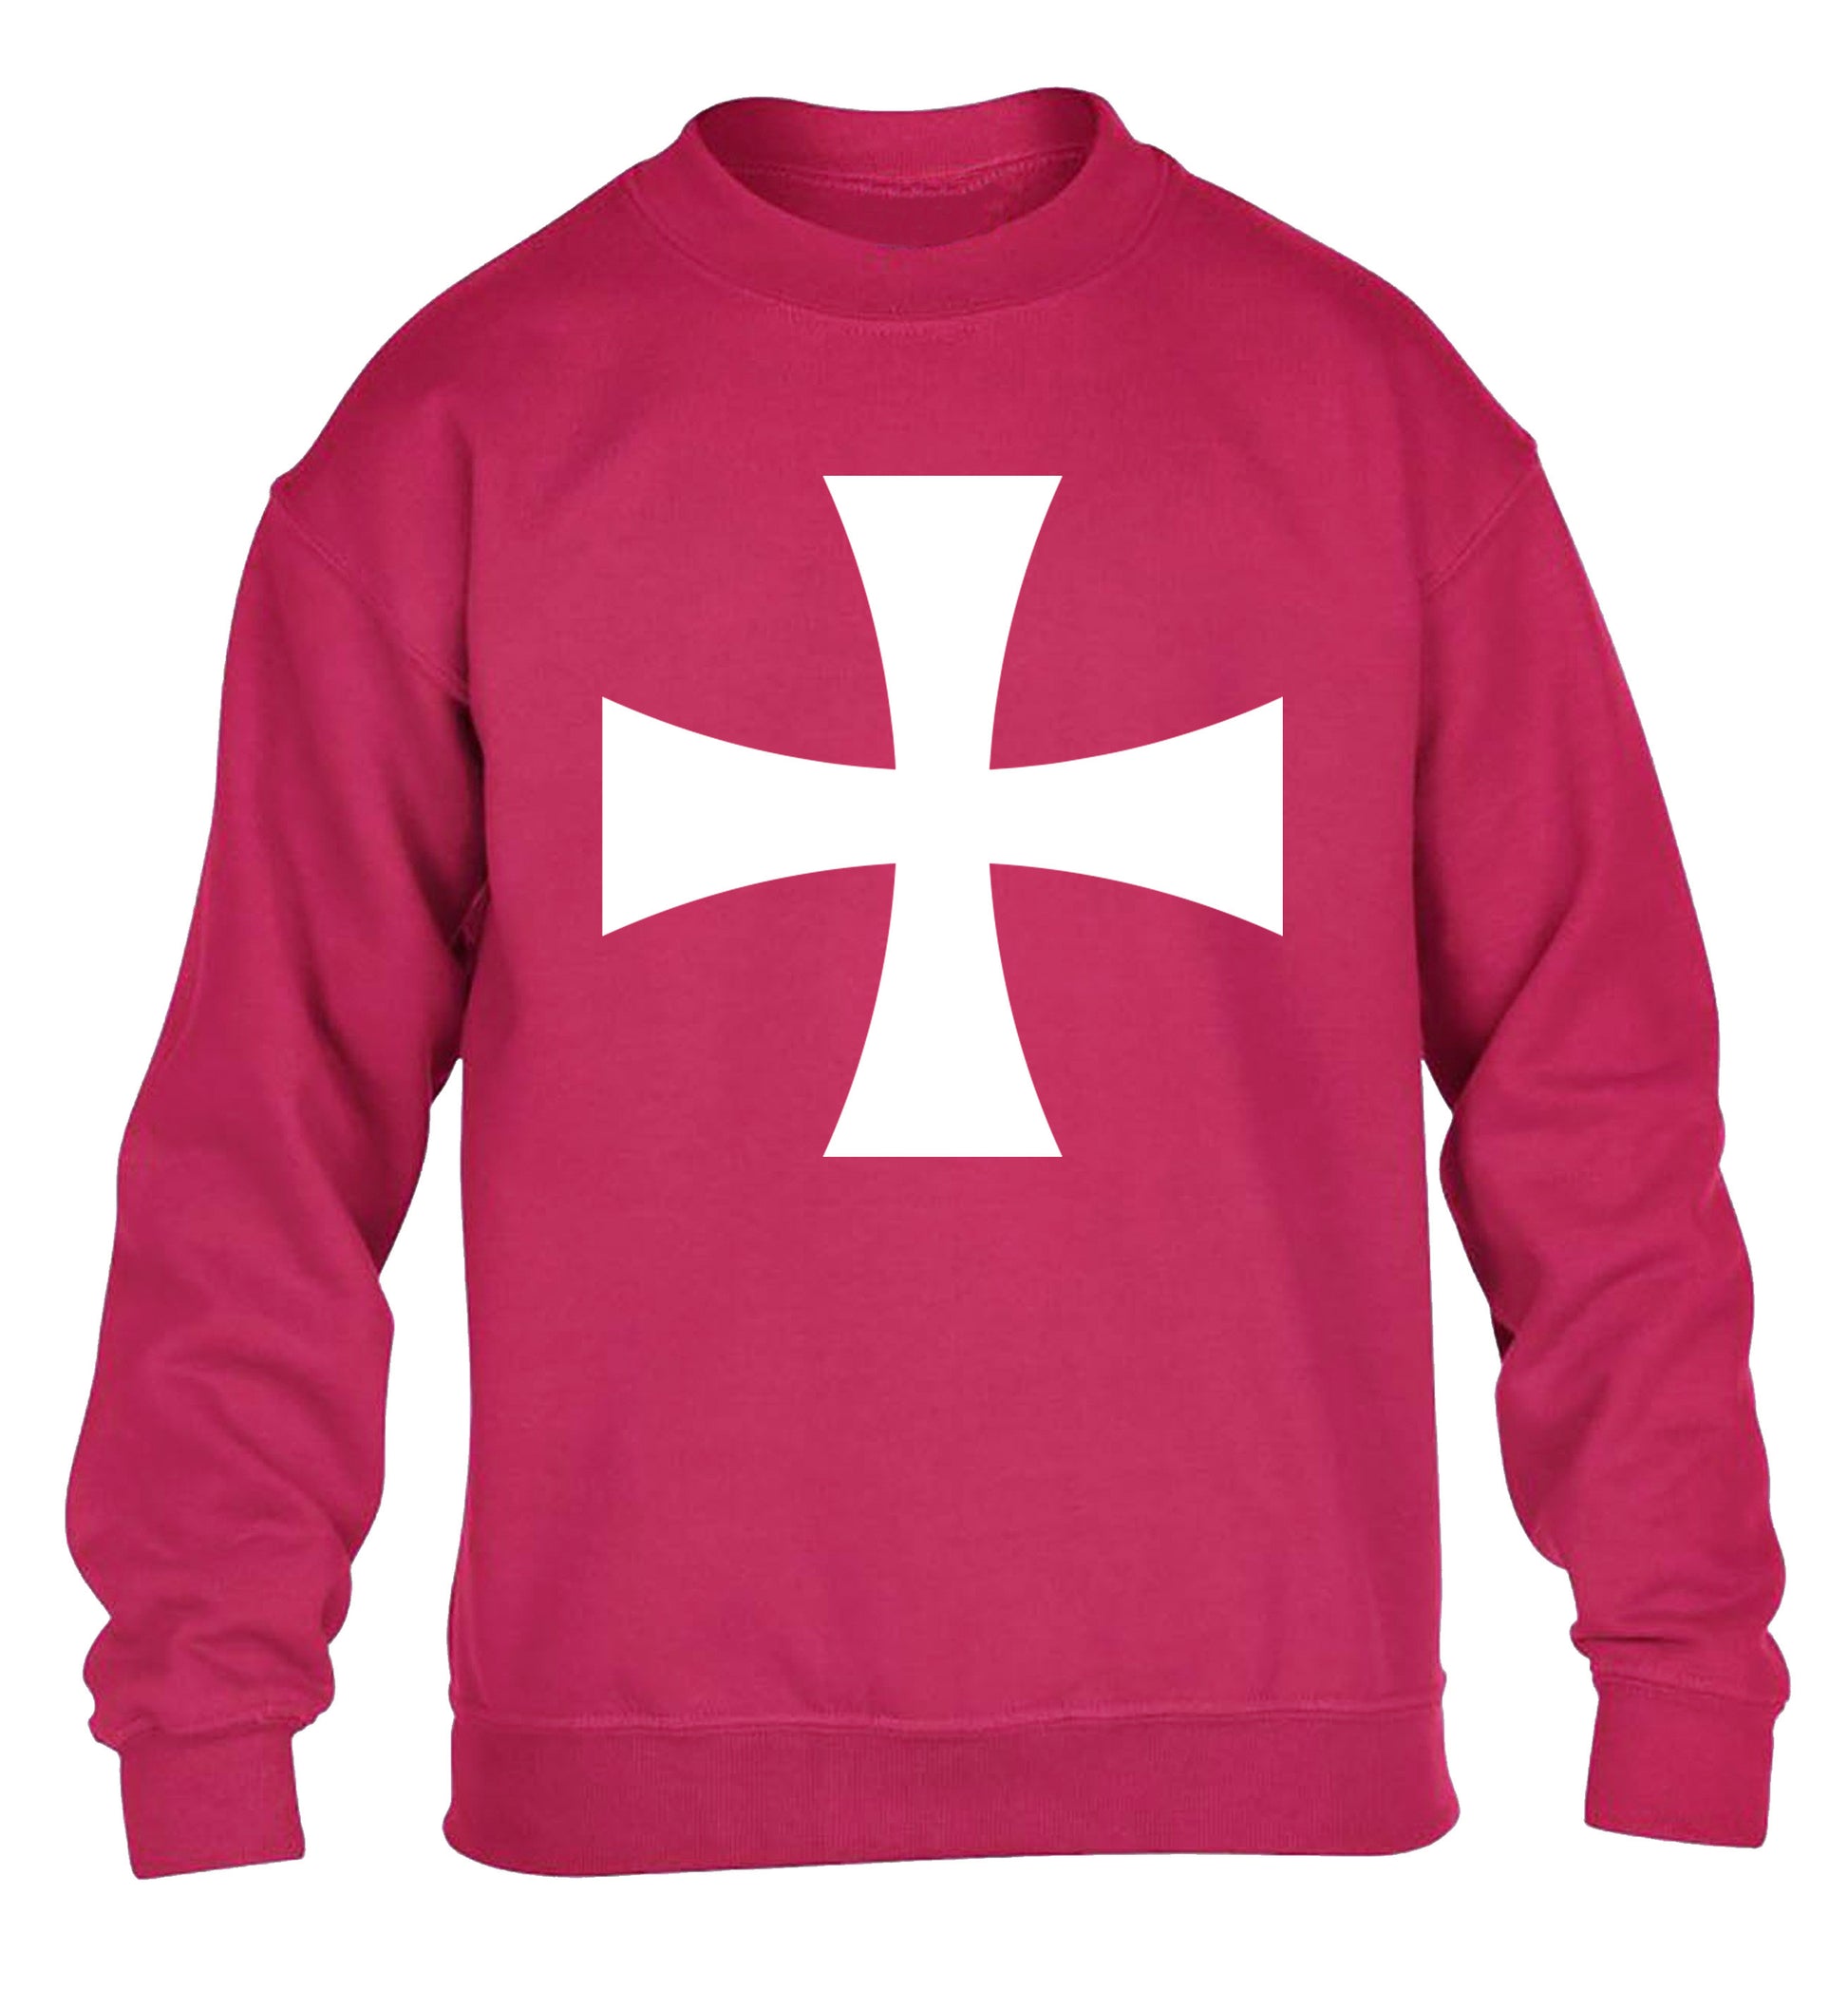 Knights Templar cross children's pink sweater 12-14 Years